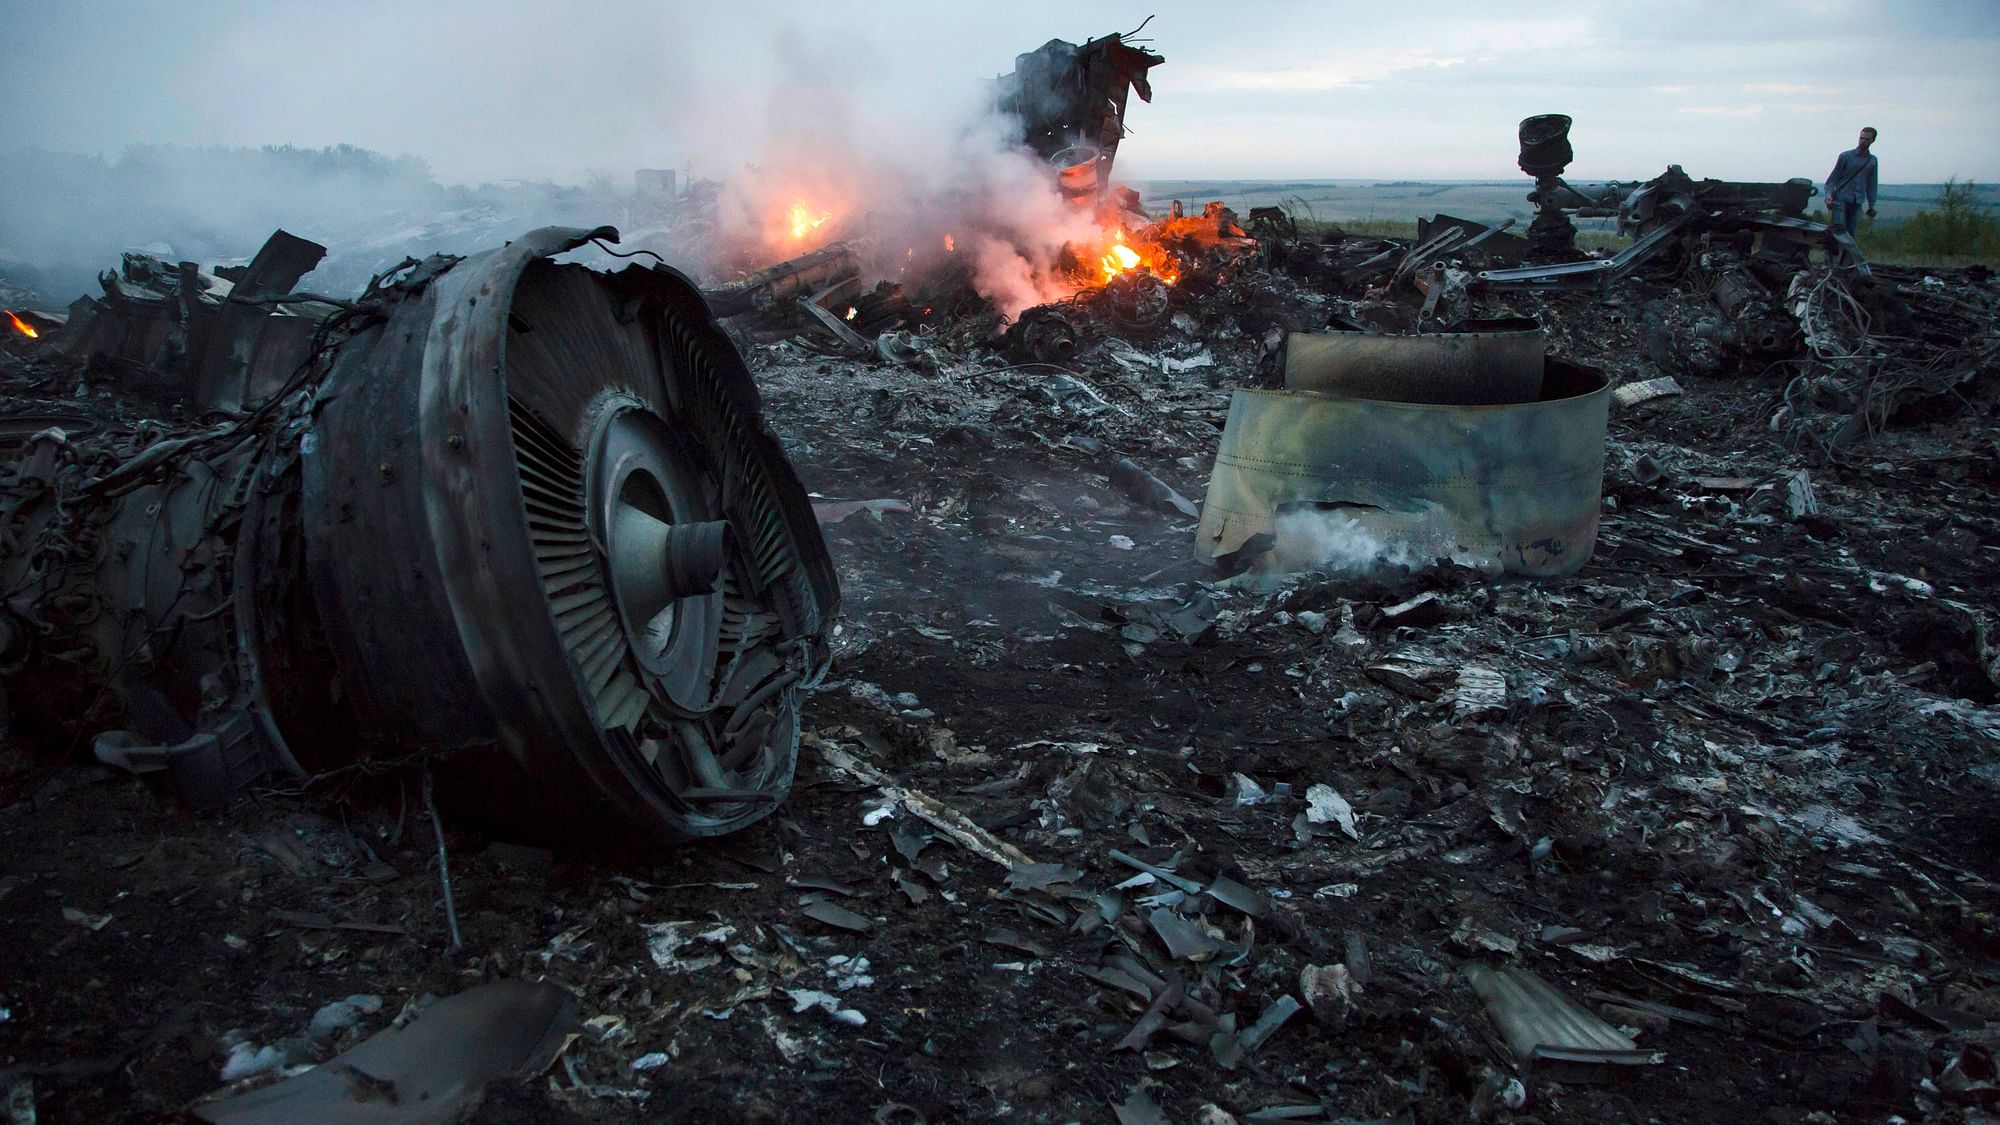 A man walks amongst the  debris at the crash site of a passenger plane near the village of Hrabove, Ukraine.